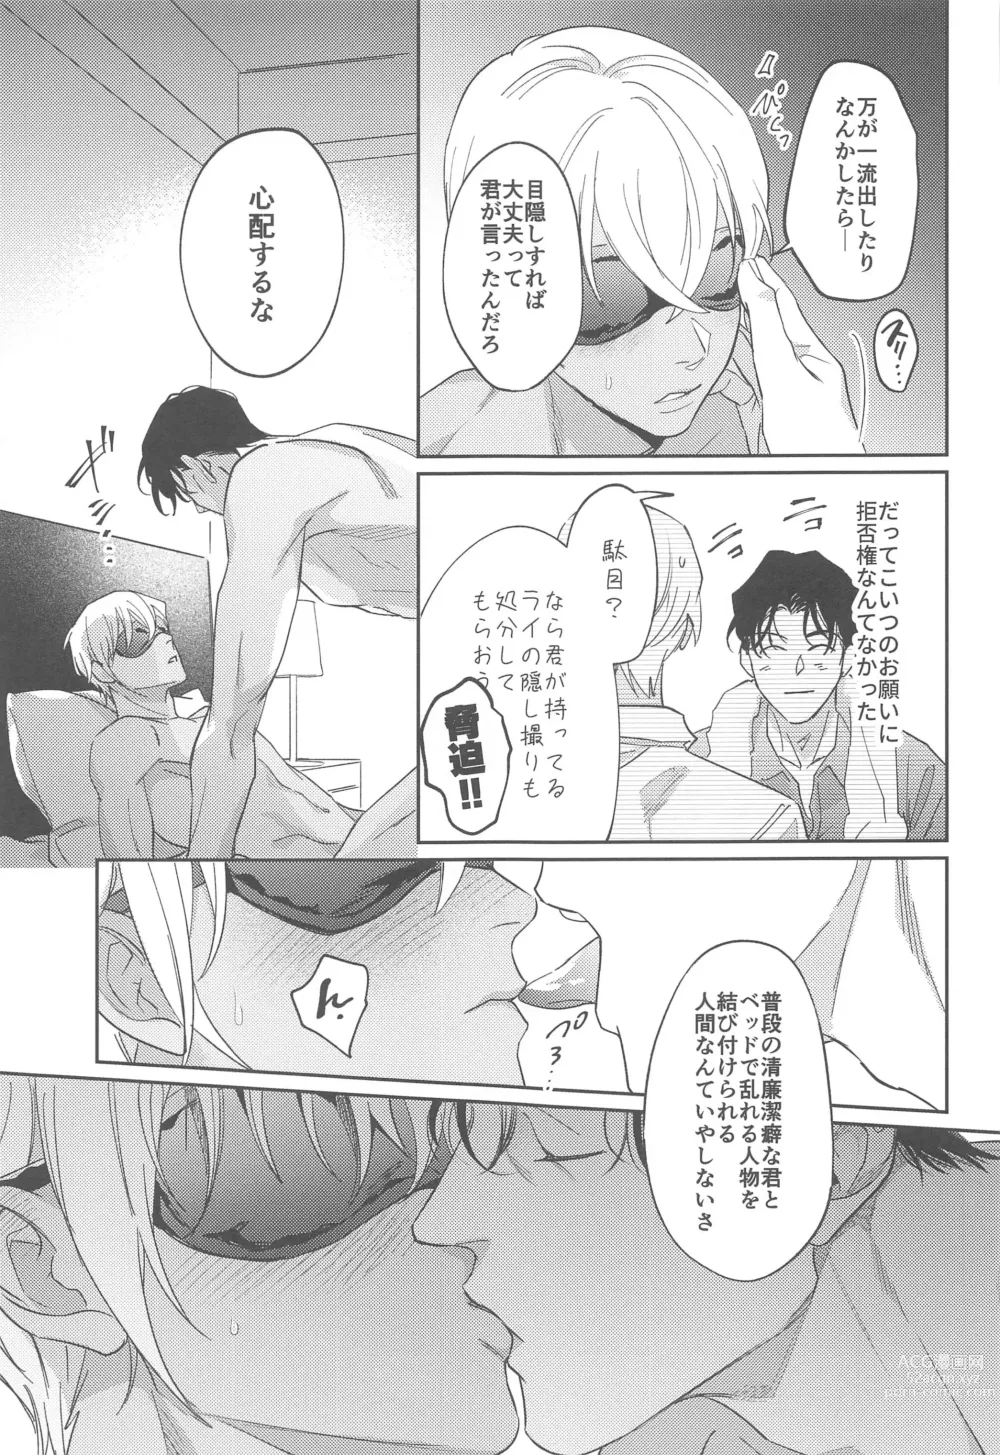 Page 14 of doujinshi REC